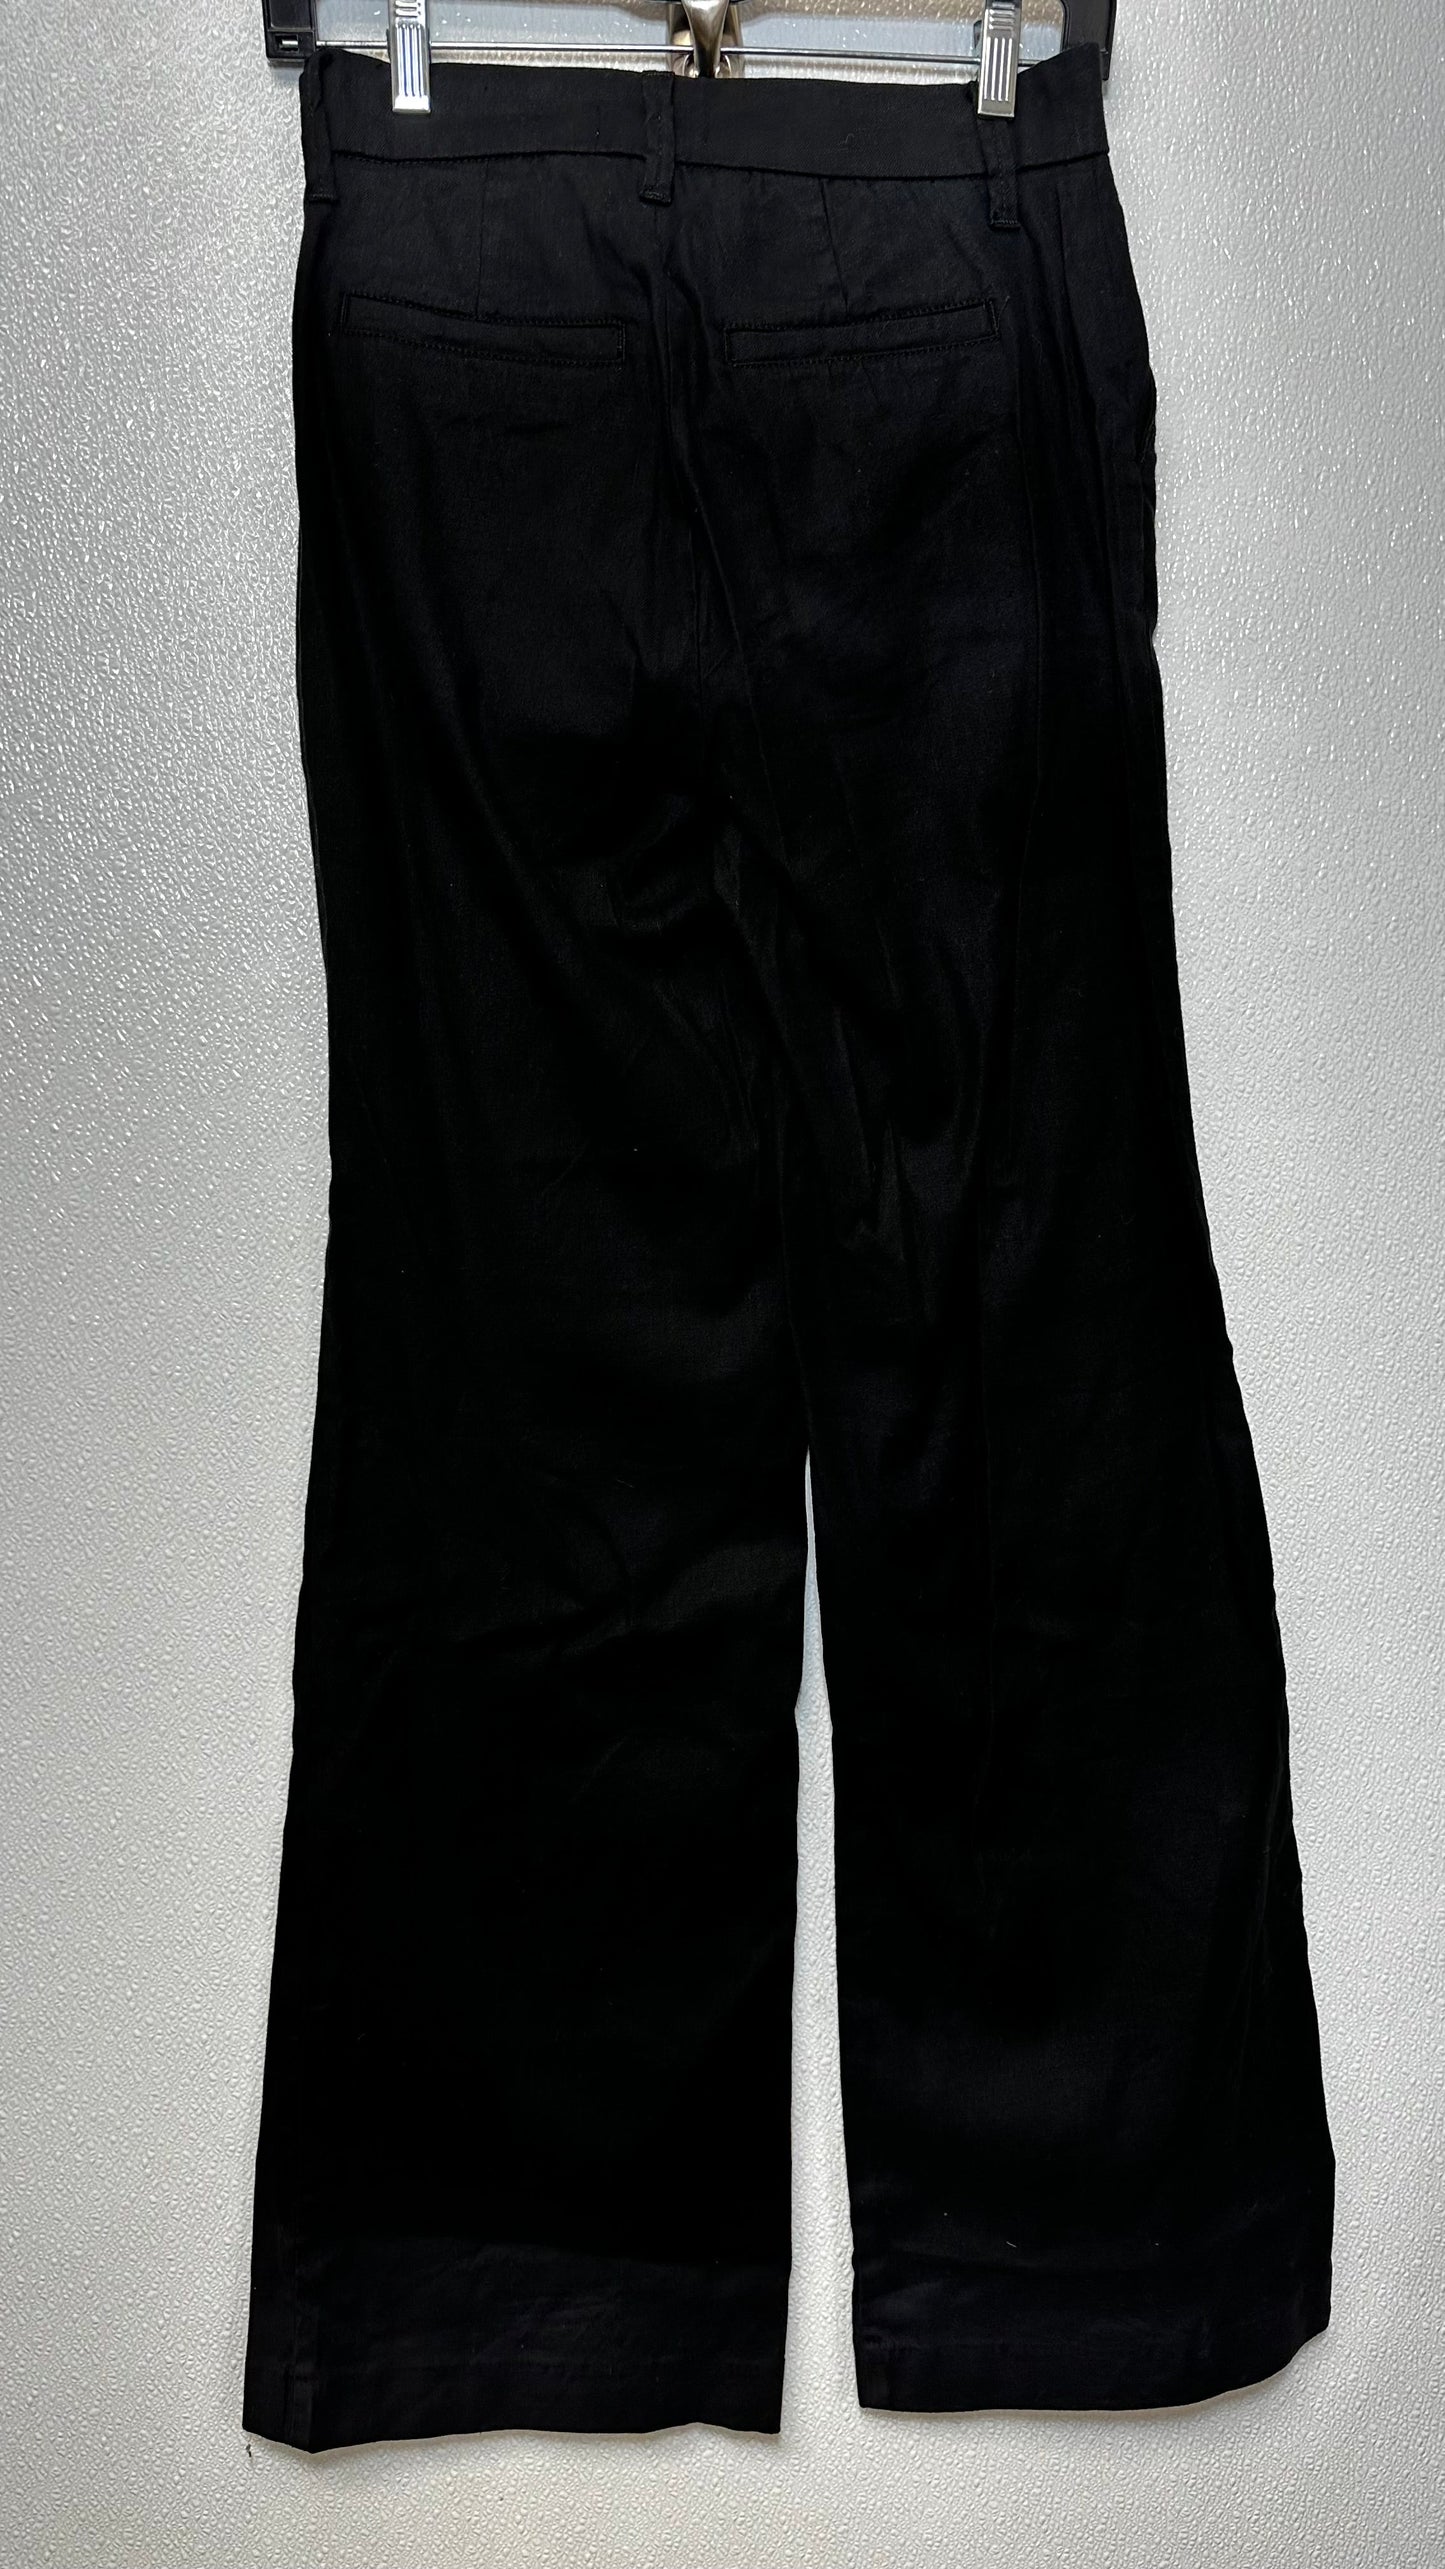 Black Pants Work/dress Clothes Mentor, Size 4